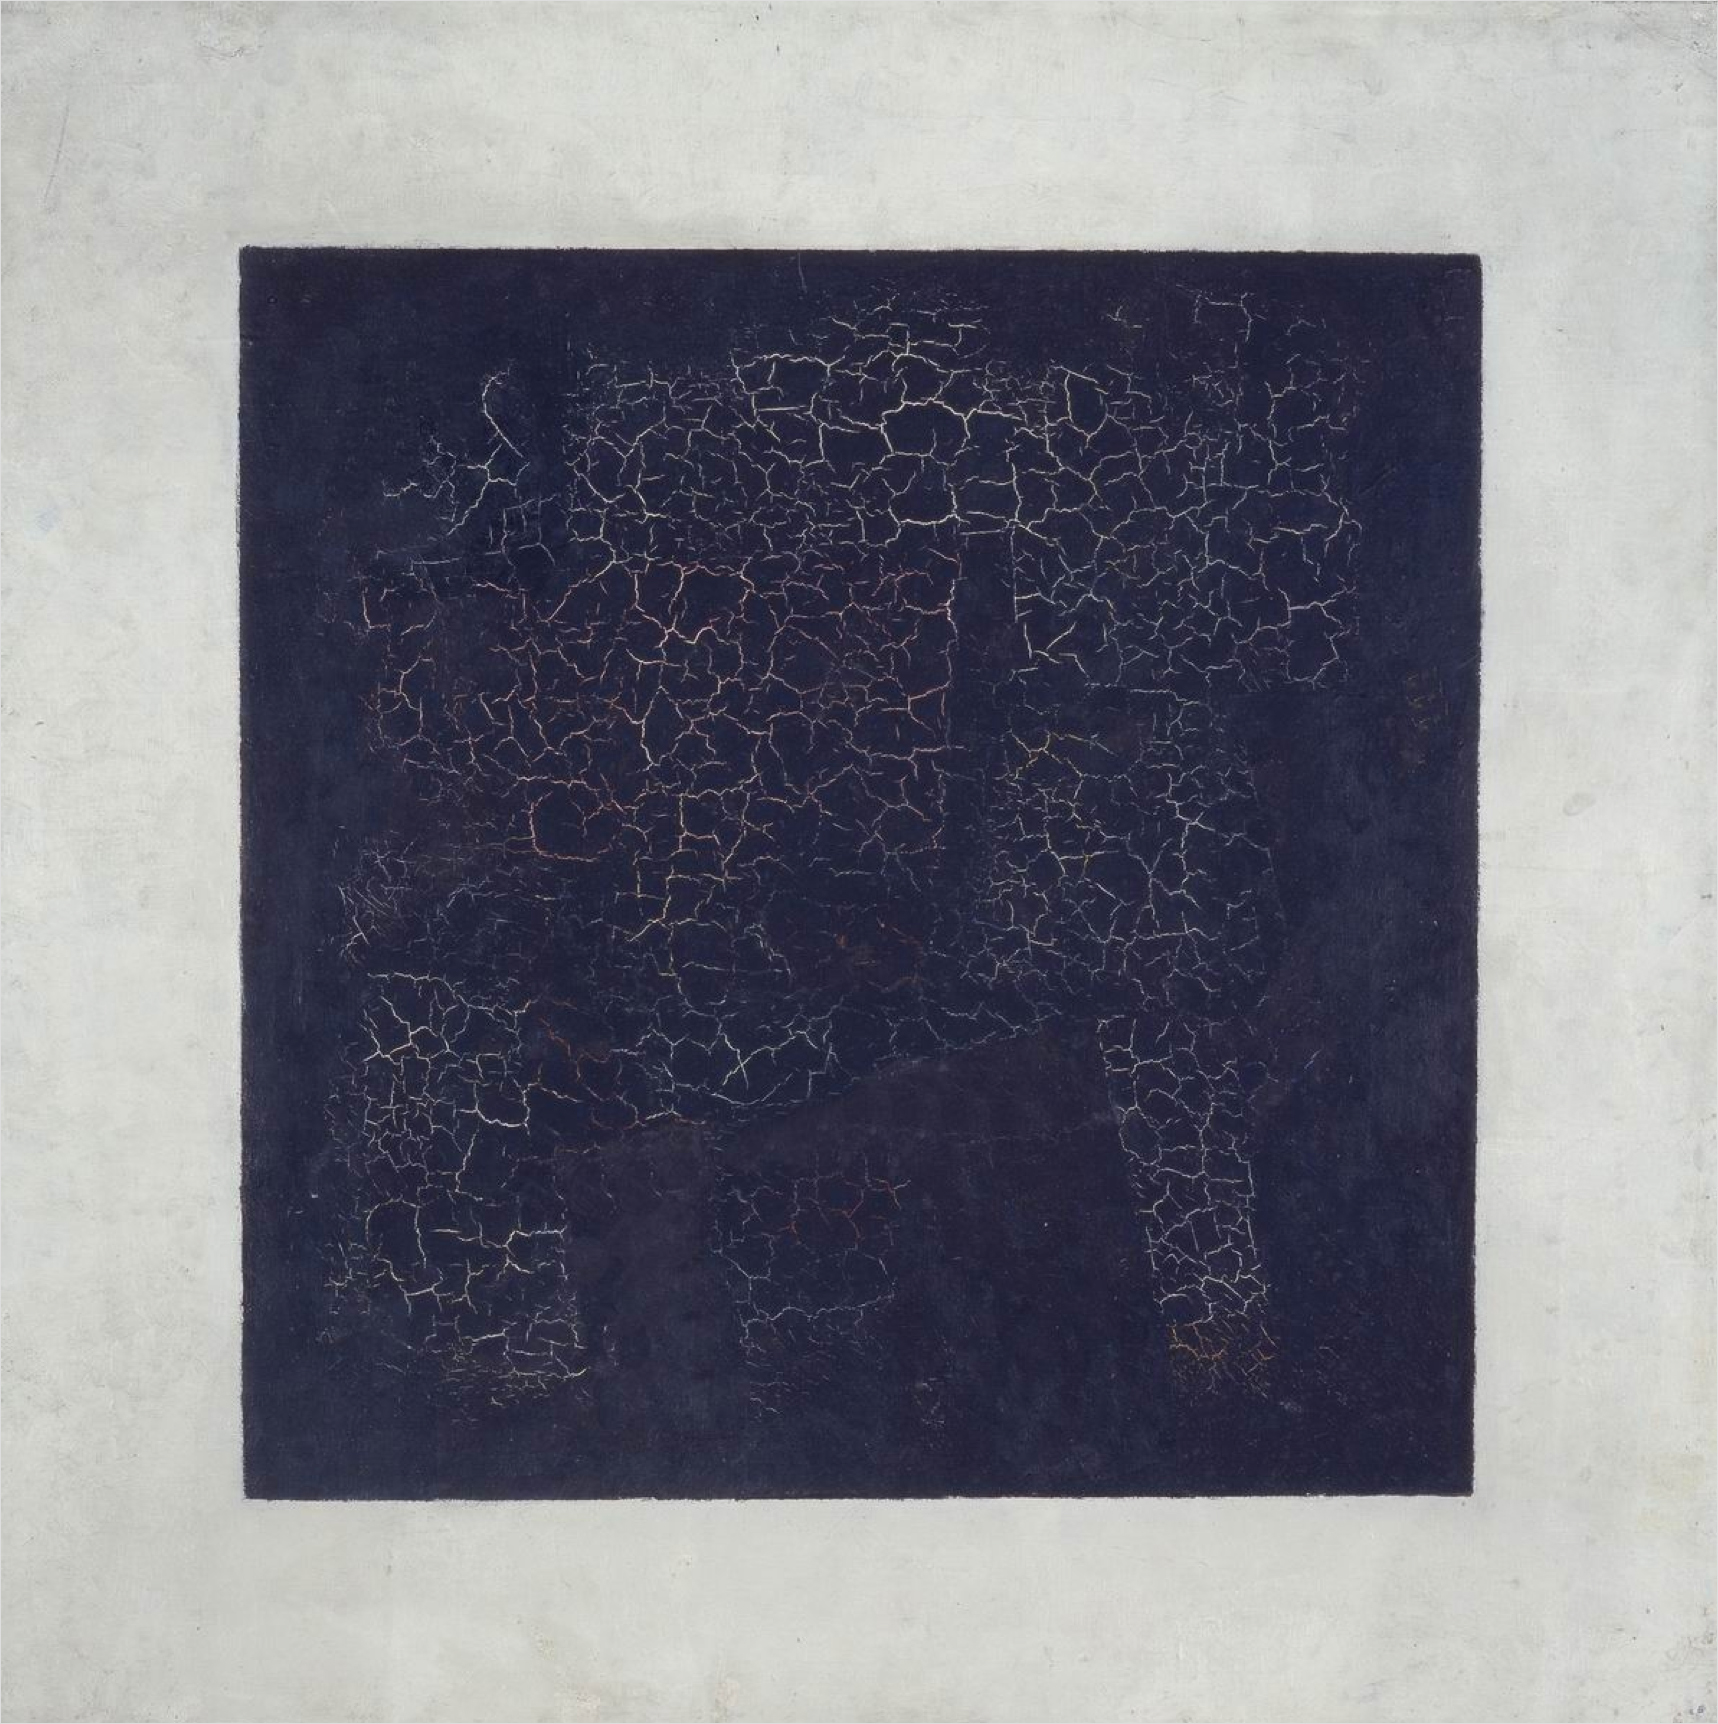 Kazimir Malevich, Black Square, 1915, oil on linen, 79.5 × 79.5 cm, Tretyakov Gallery, Moscow